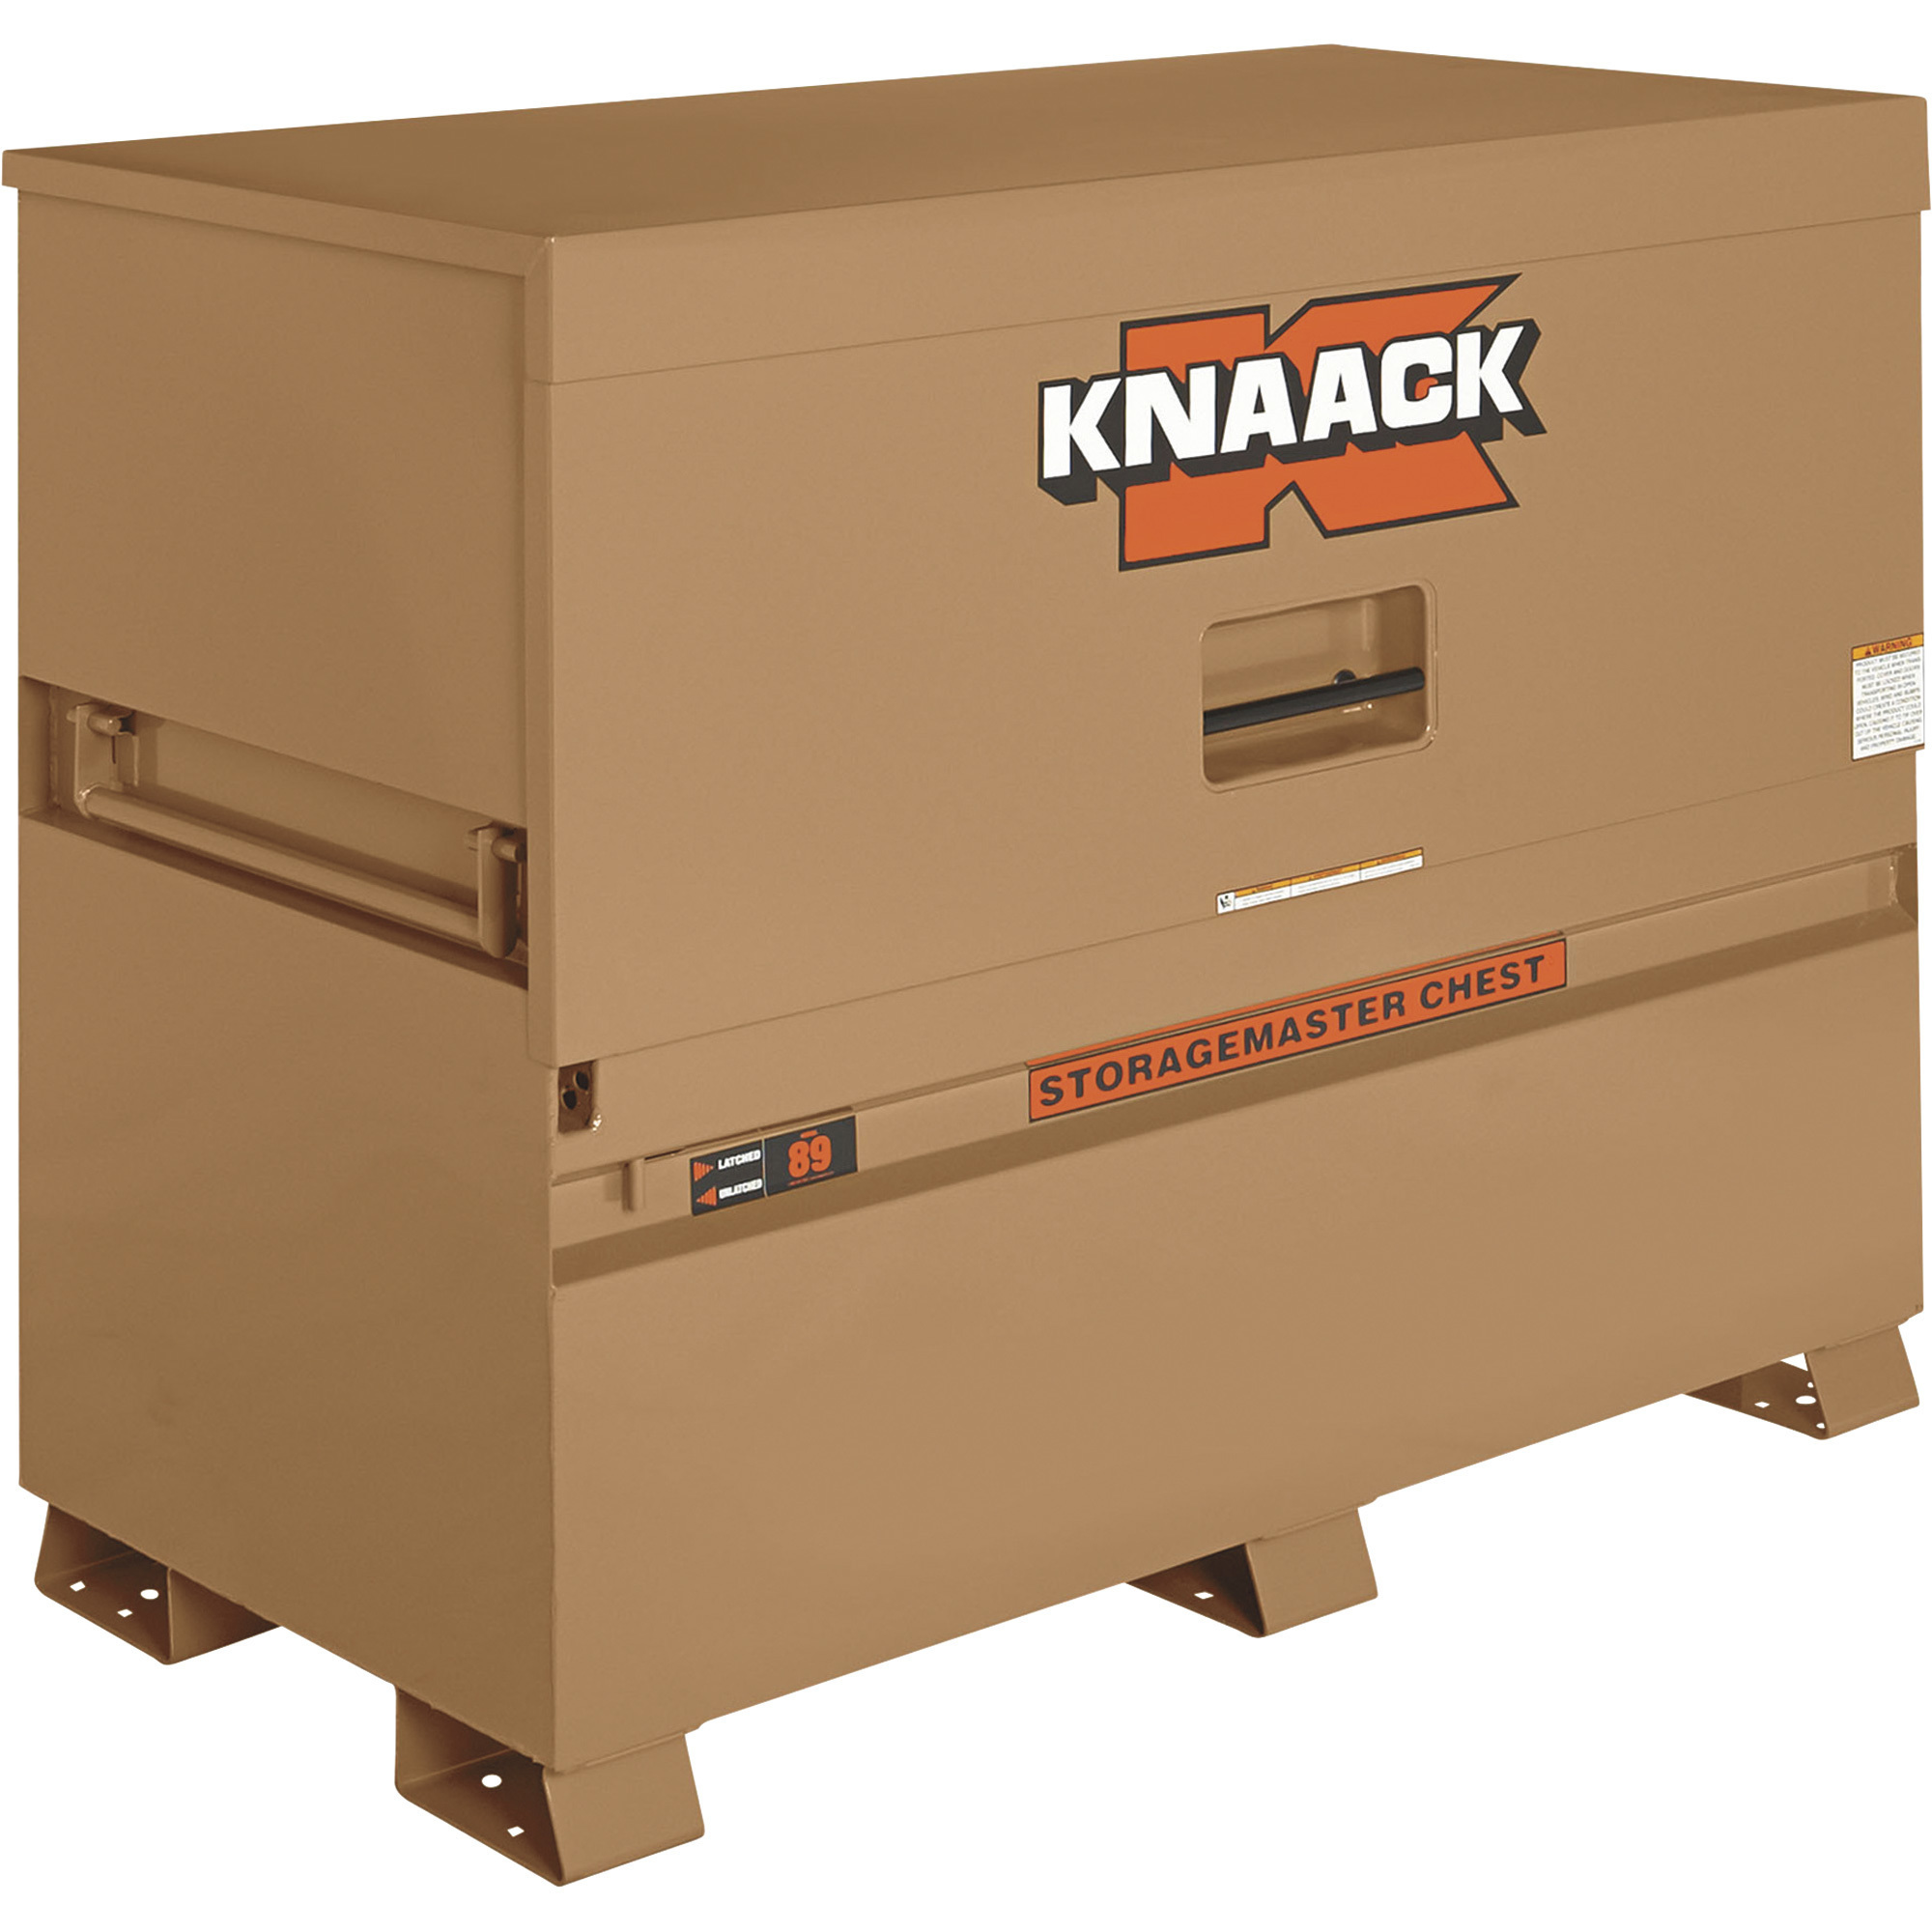 KNAACK Storagemaster Piano Box, Tan, 47.8 Cu. Ft., 60Inch W x 30Inch D x 49Inch H, Model 89